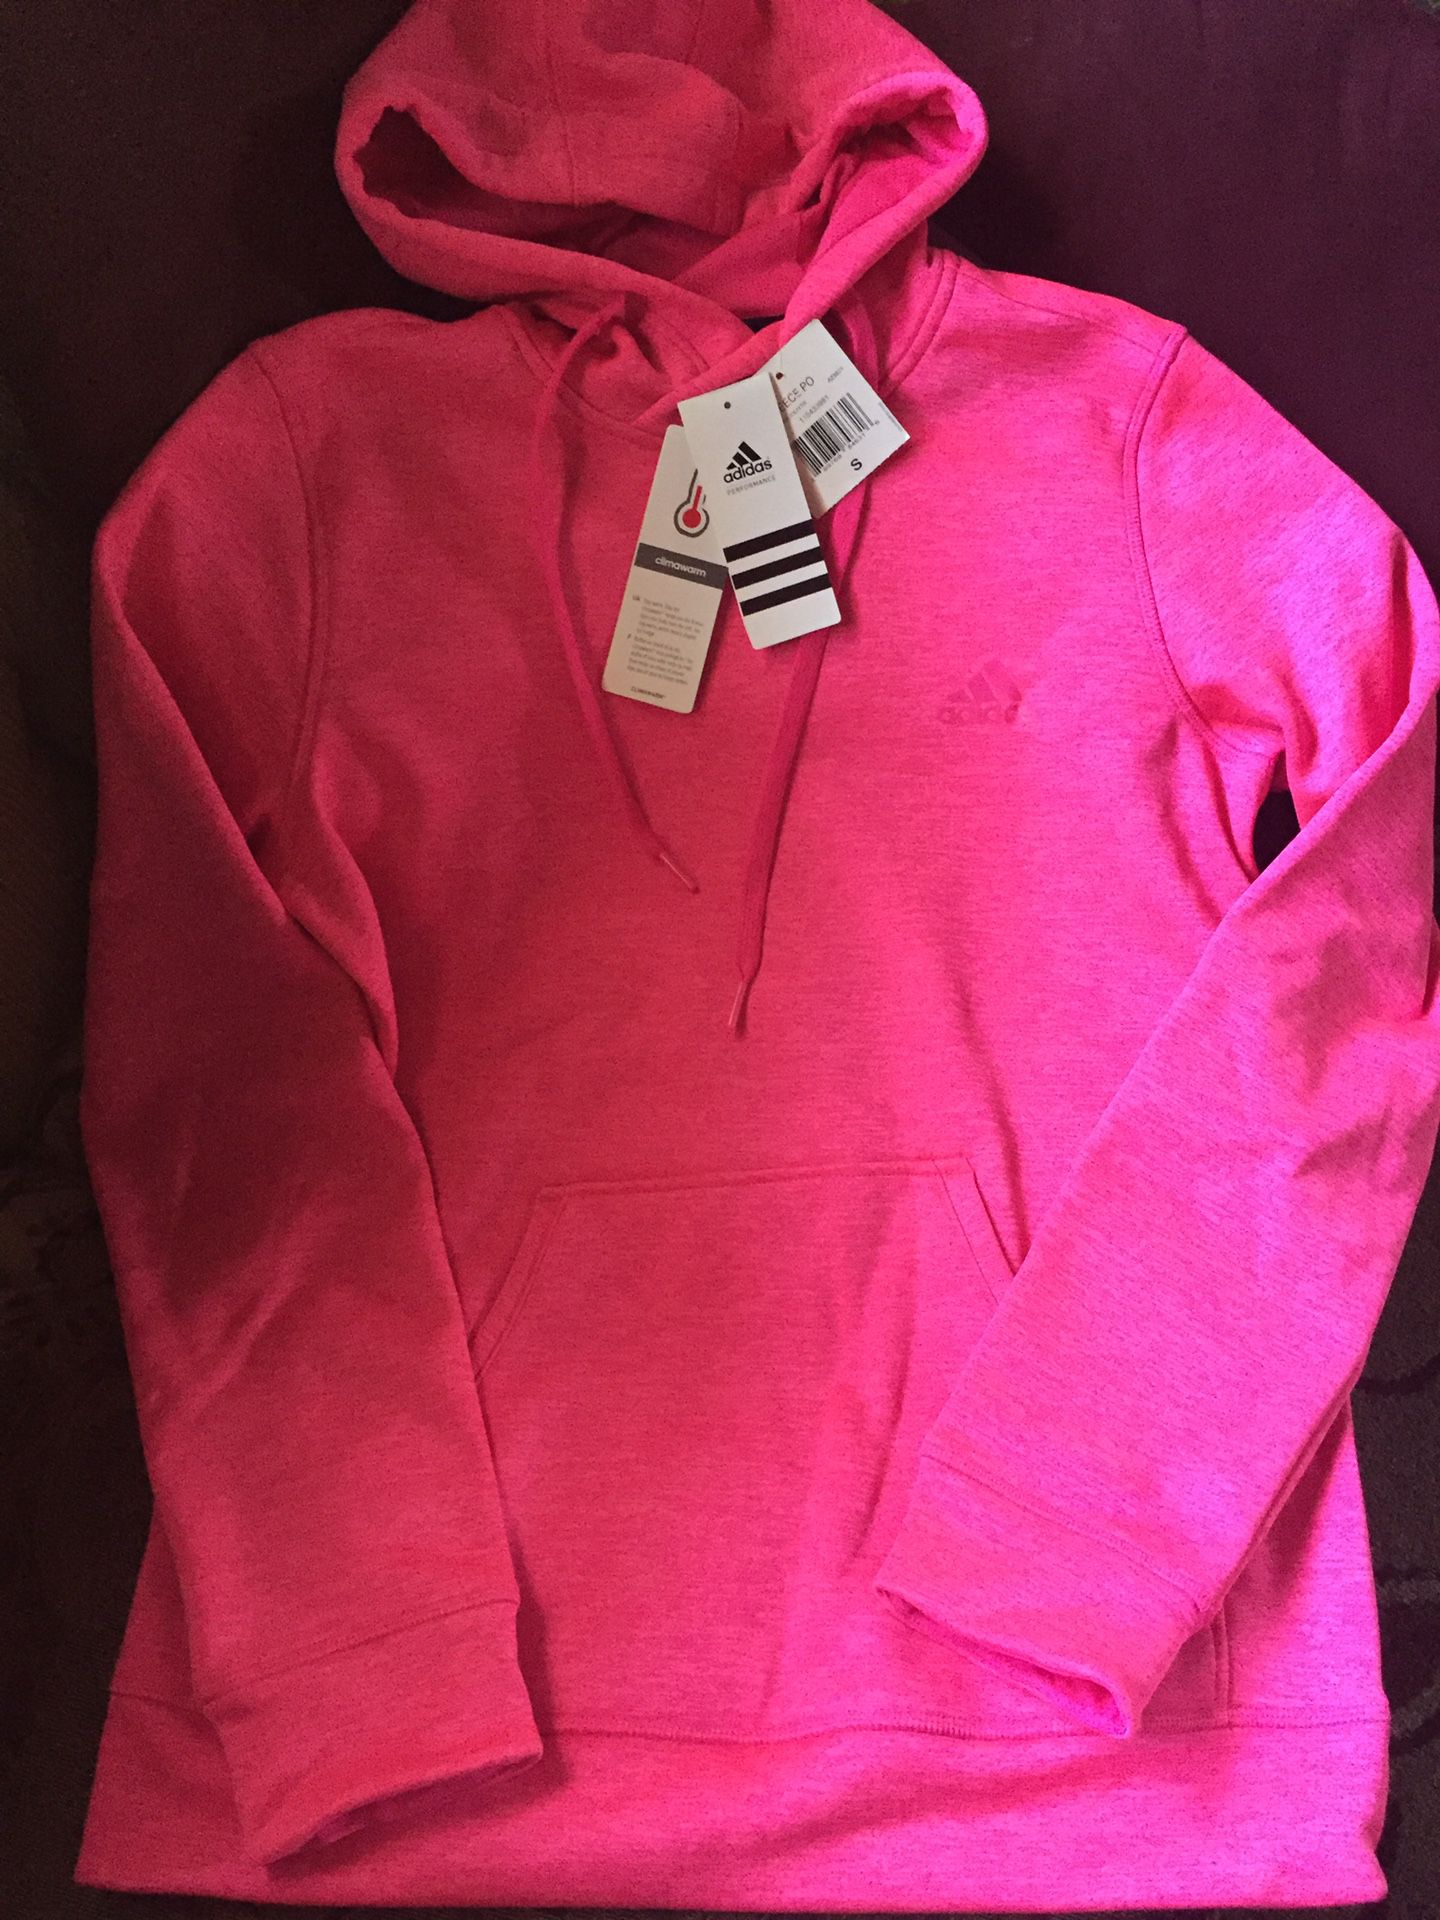 NEW Adidas pink women’s hoodie sweatshirt size small